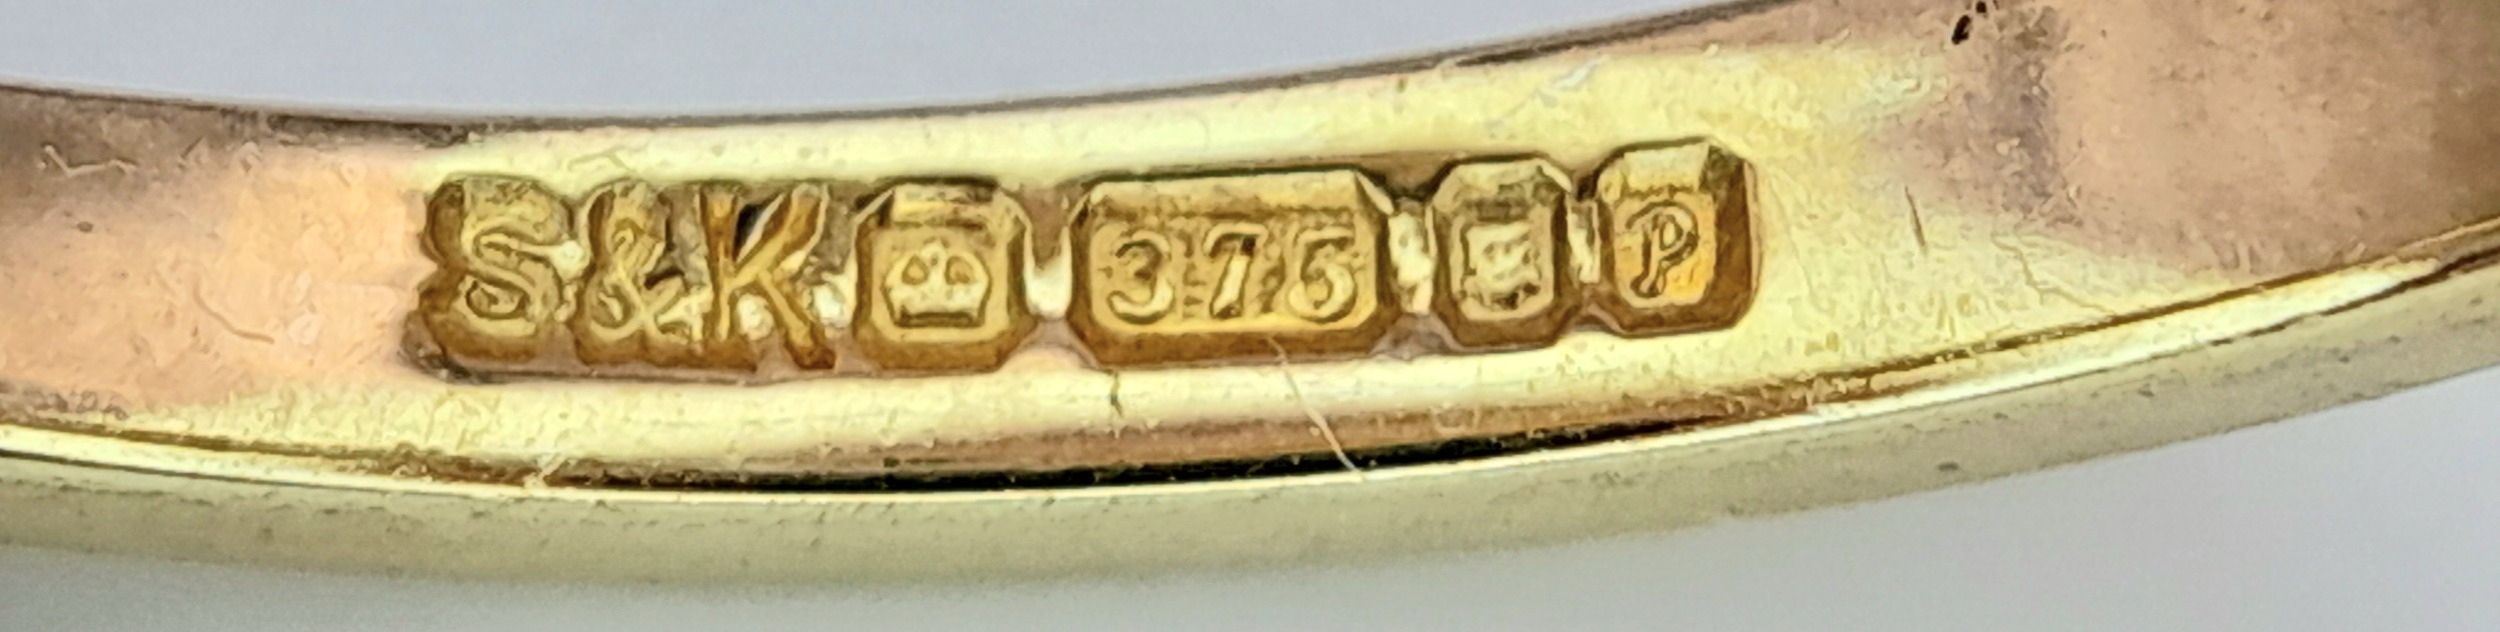 A 9K YELLOW GOLD DIAMOND AND SAPPHIRE SET WISHBONE RING. 2G. SIZE M. - Image 5 of 5